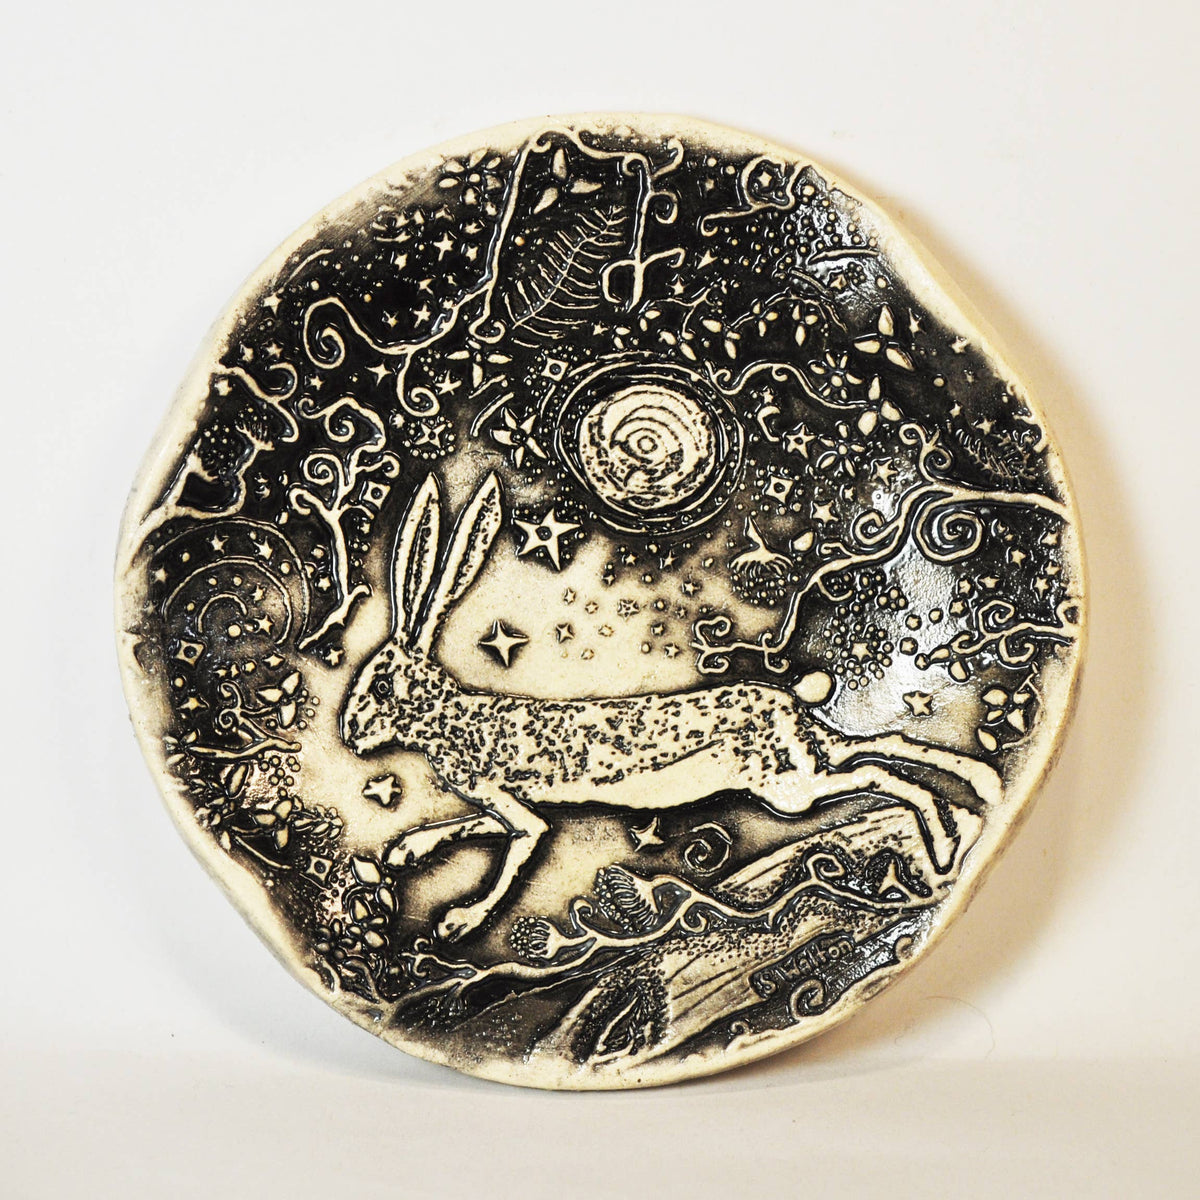 Clay Fossils - Handmade pottery, soap dish, spoon rest, black rabbit moon